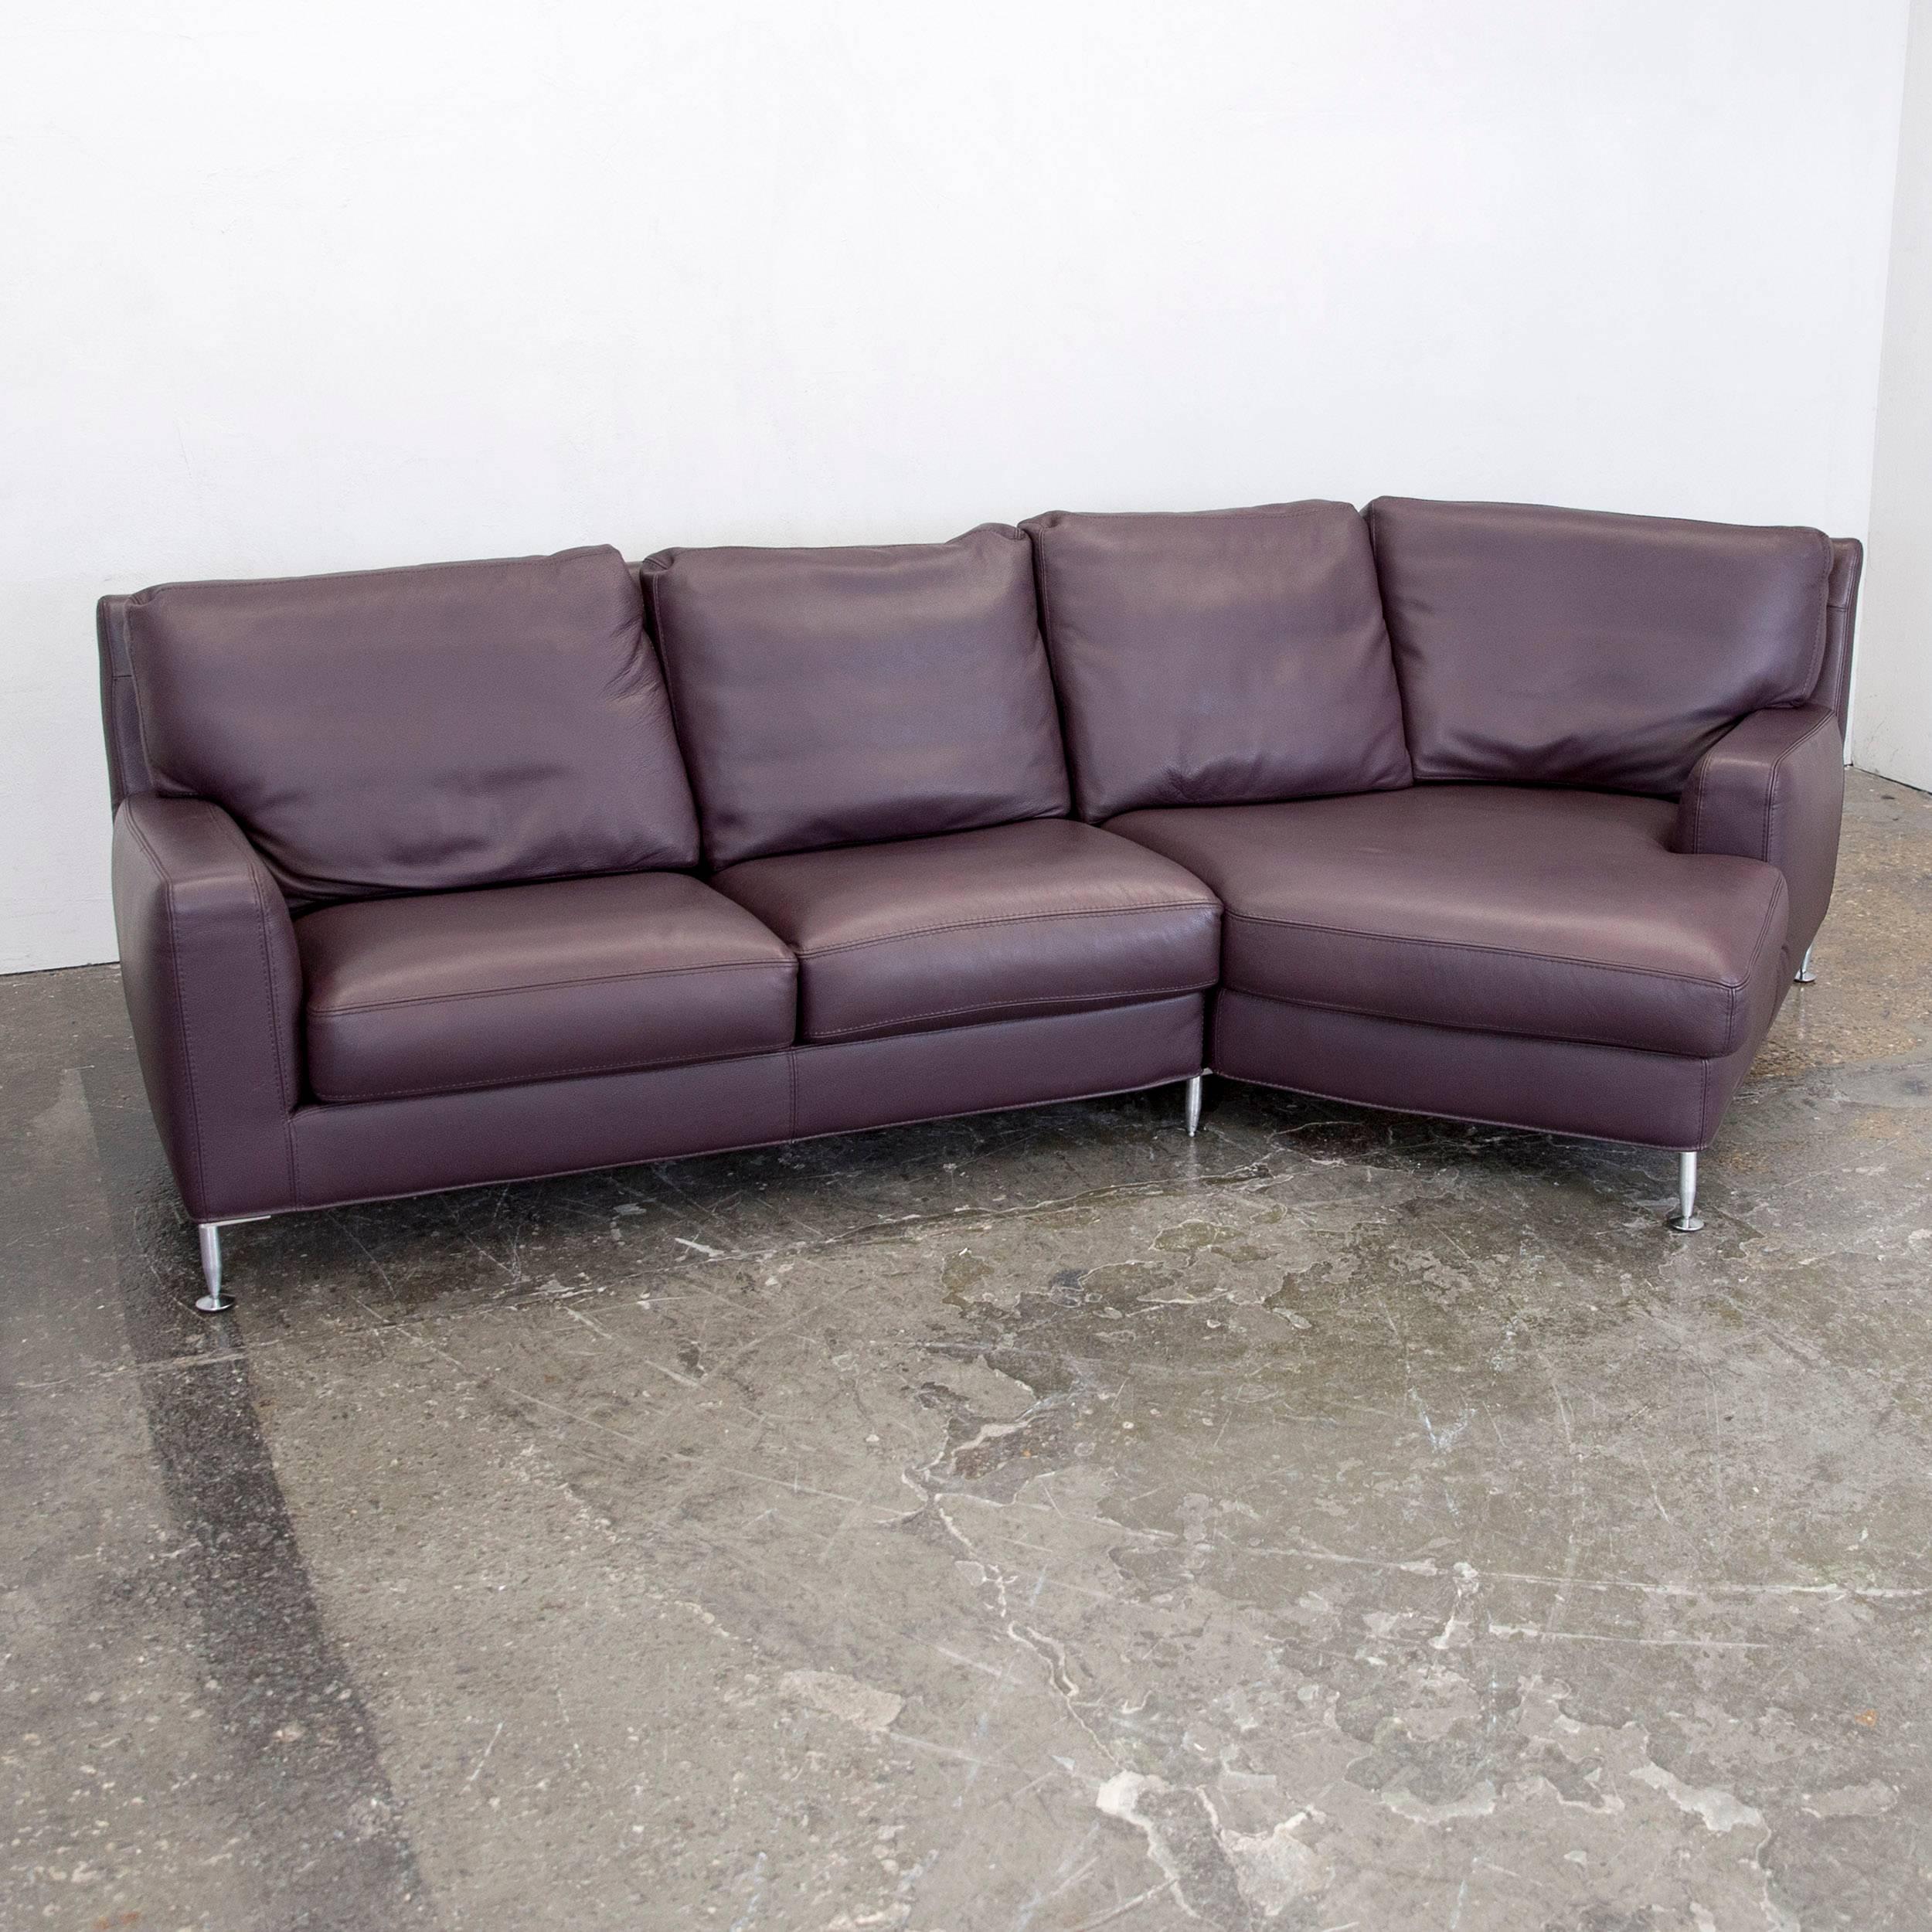 Modern corner sofa in aubergine.